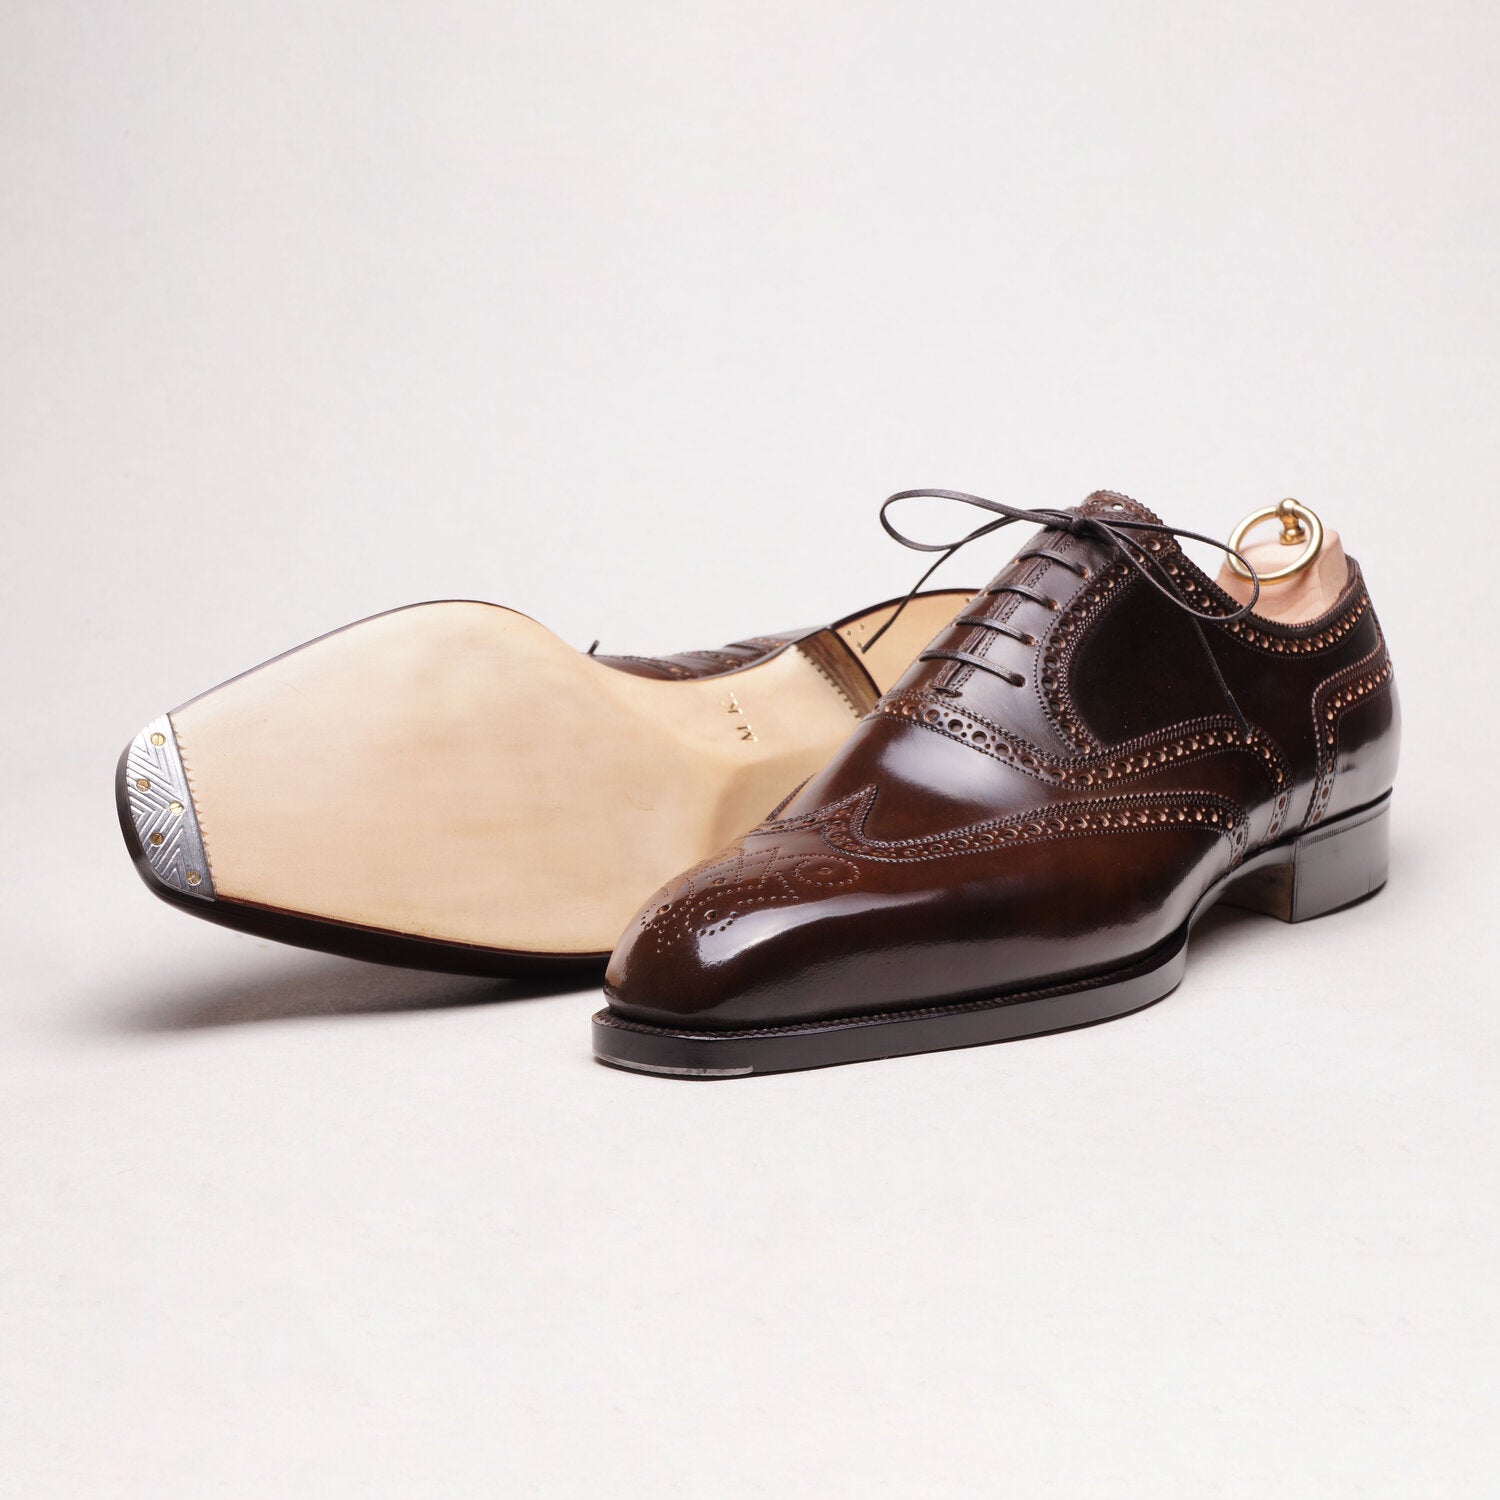 Stefano Bemer Bespoke Oxford Shoes - 2